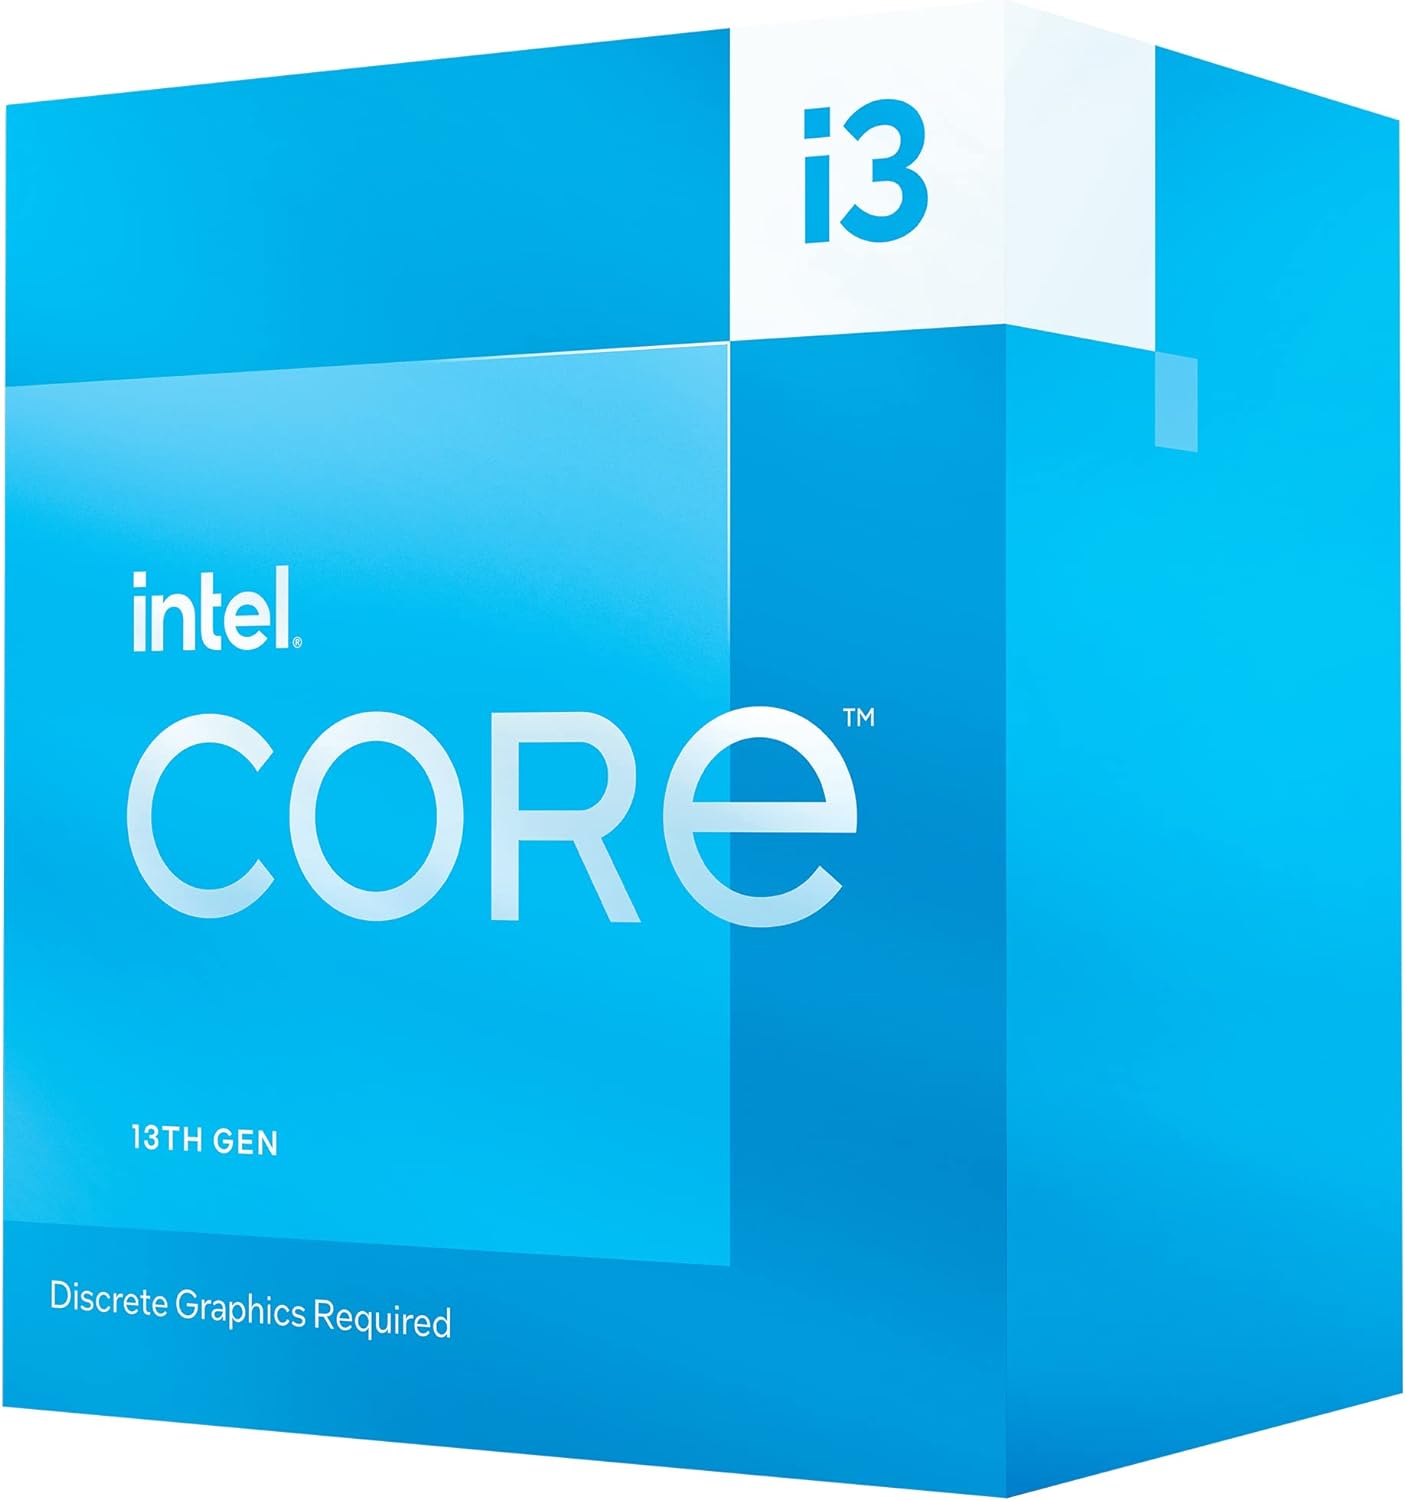 Intel Core i3-13100F Desktop Processor $67.99 at Amazon and NewEgg